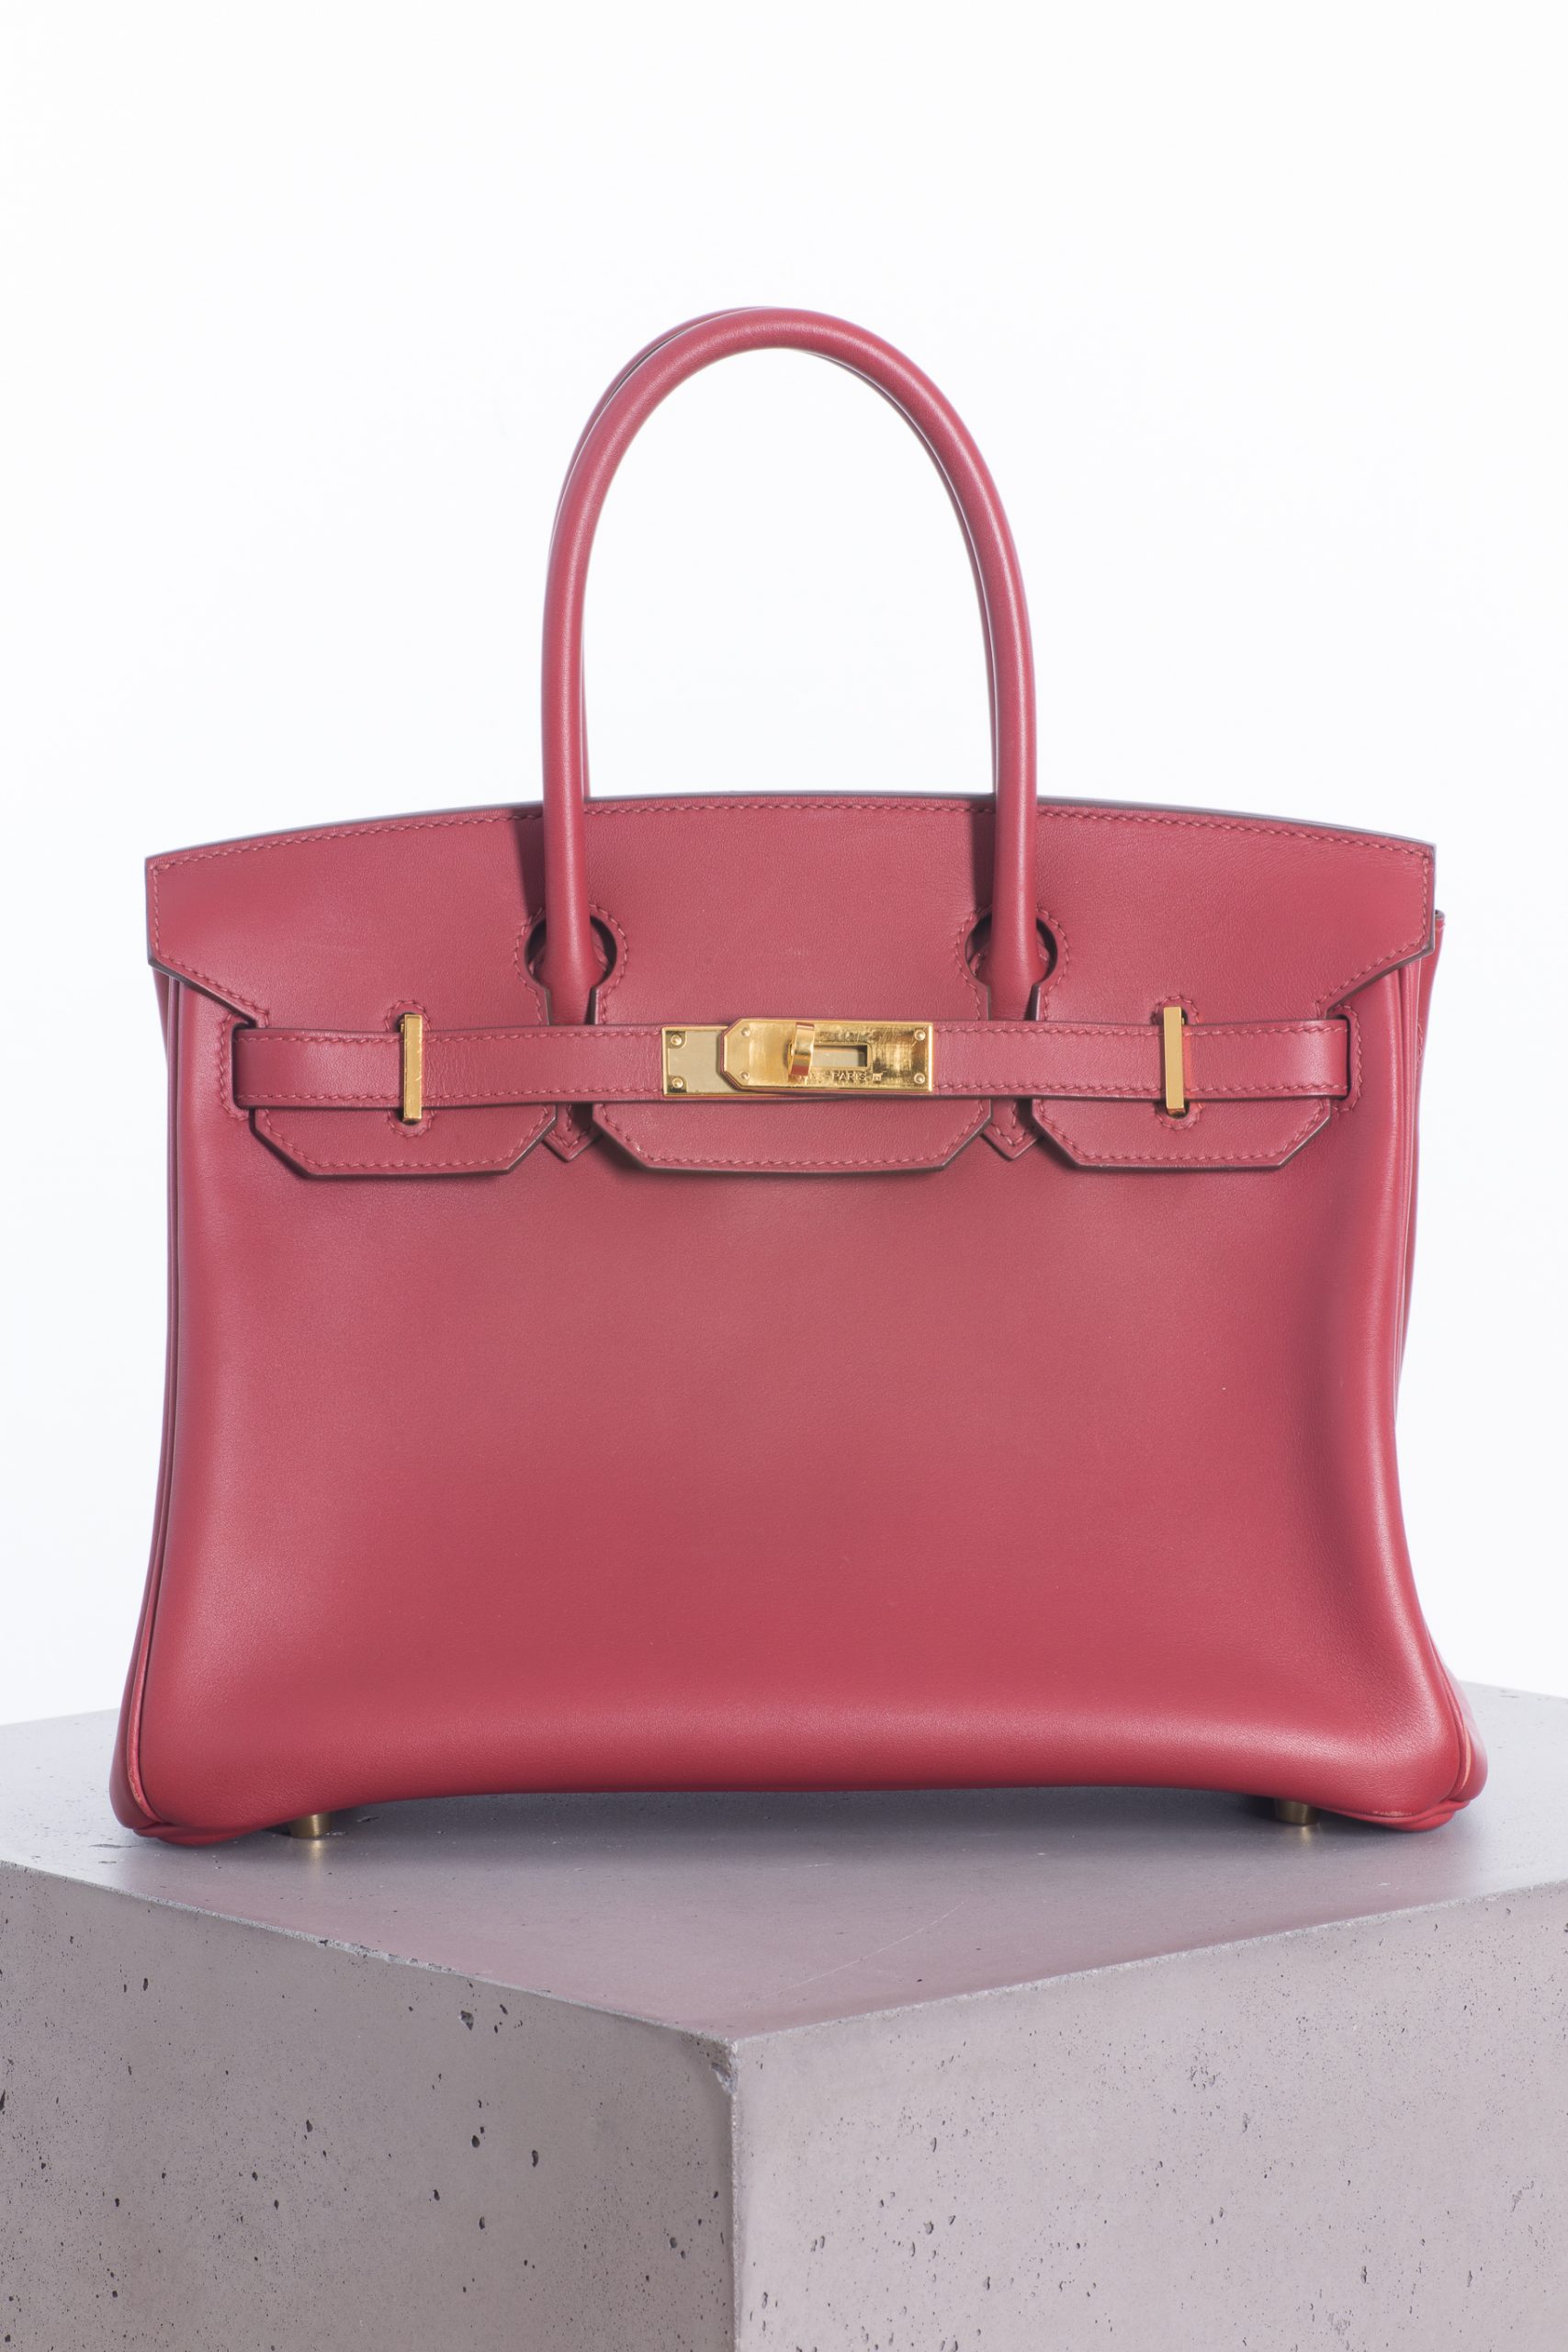 Chanel bag - Huntessa Luxury Online Consignment Boutique